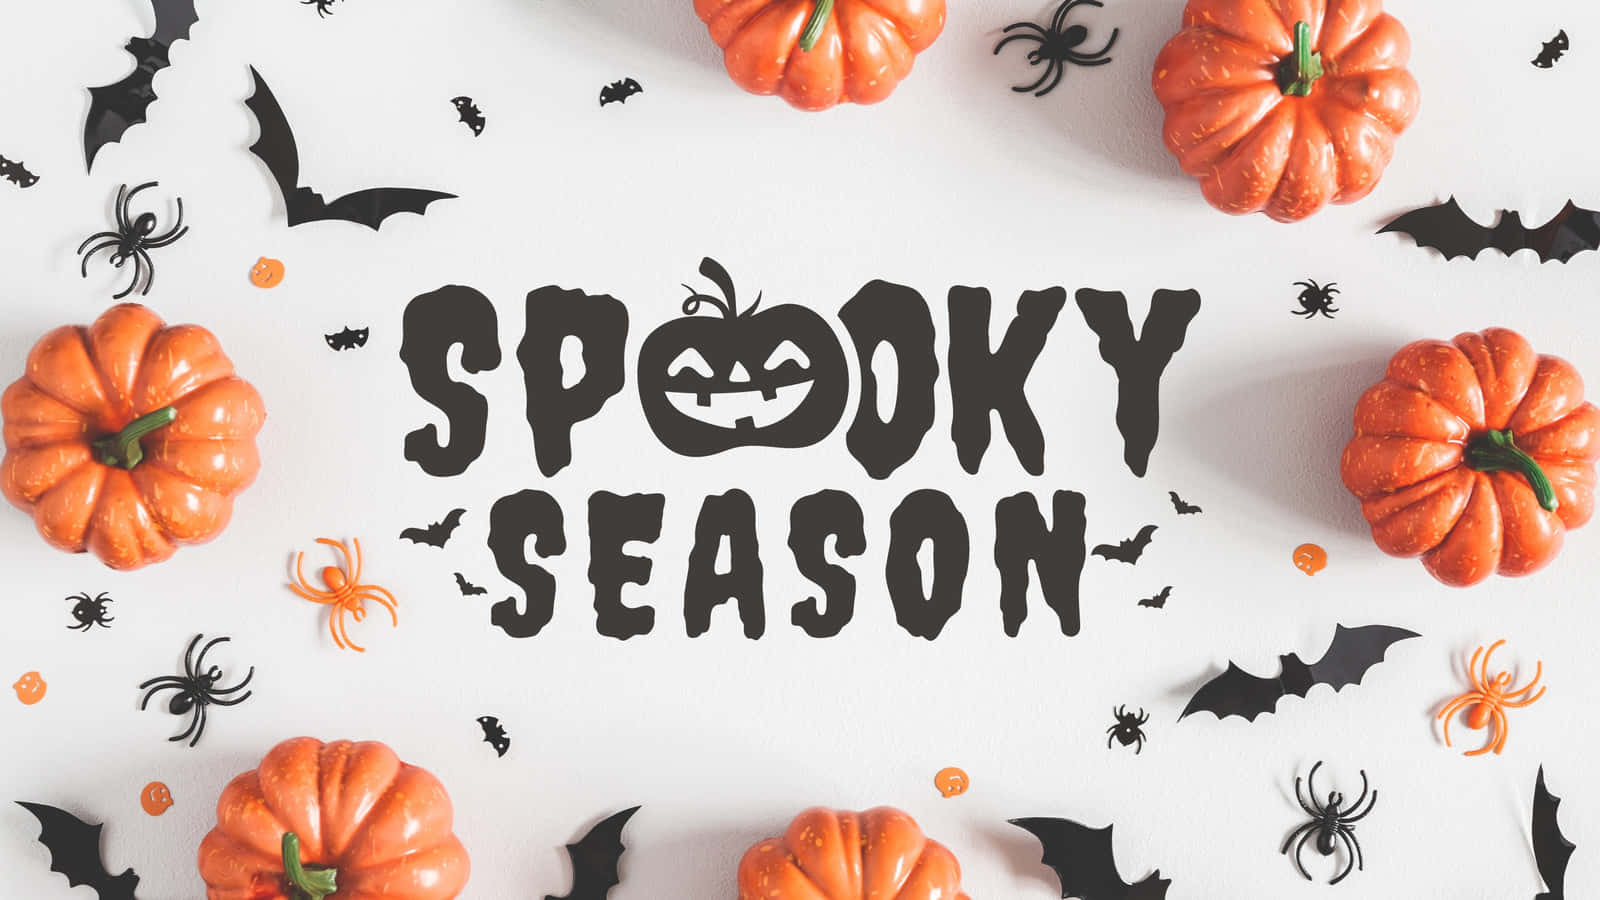 Spooky Season Flat Lay Aesthetic Creepy Halloween Background